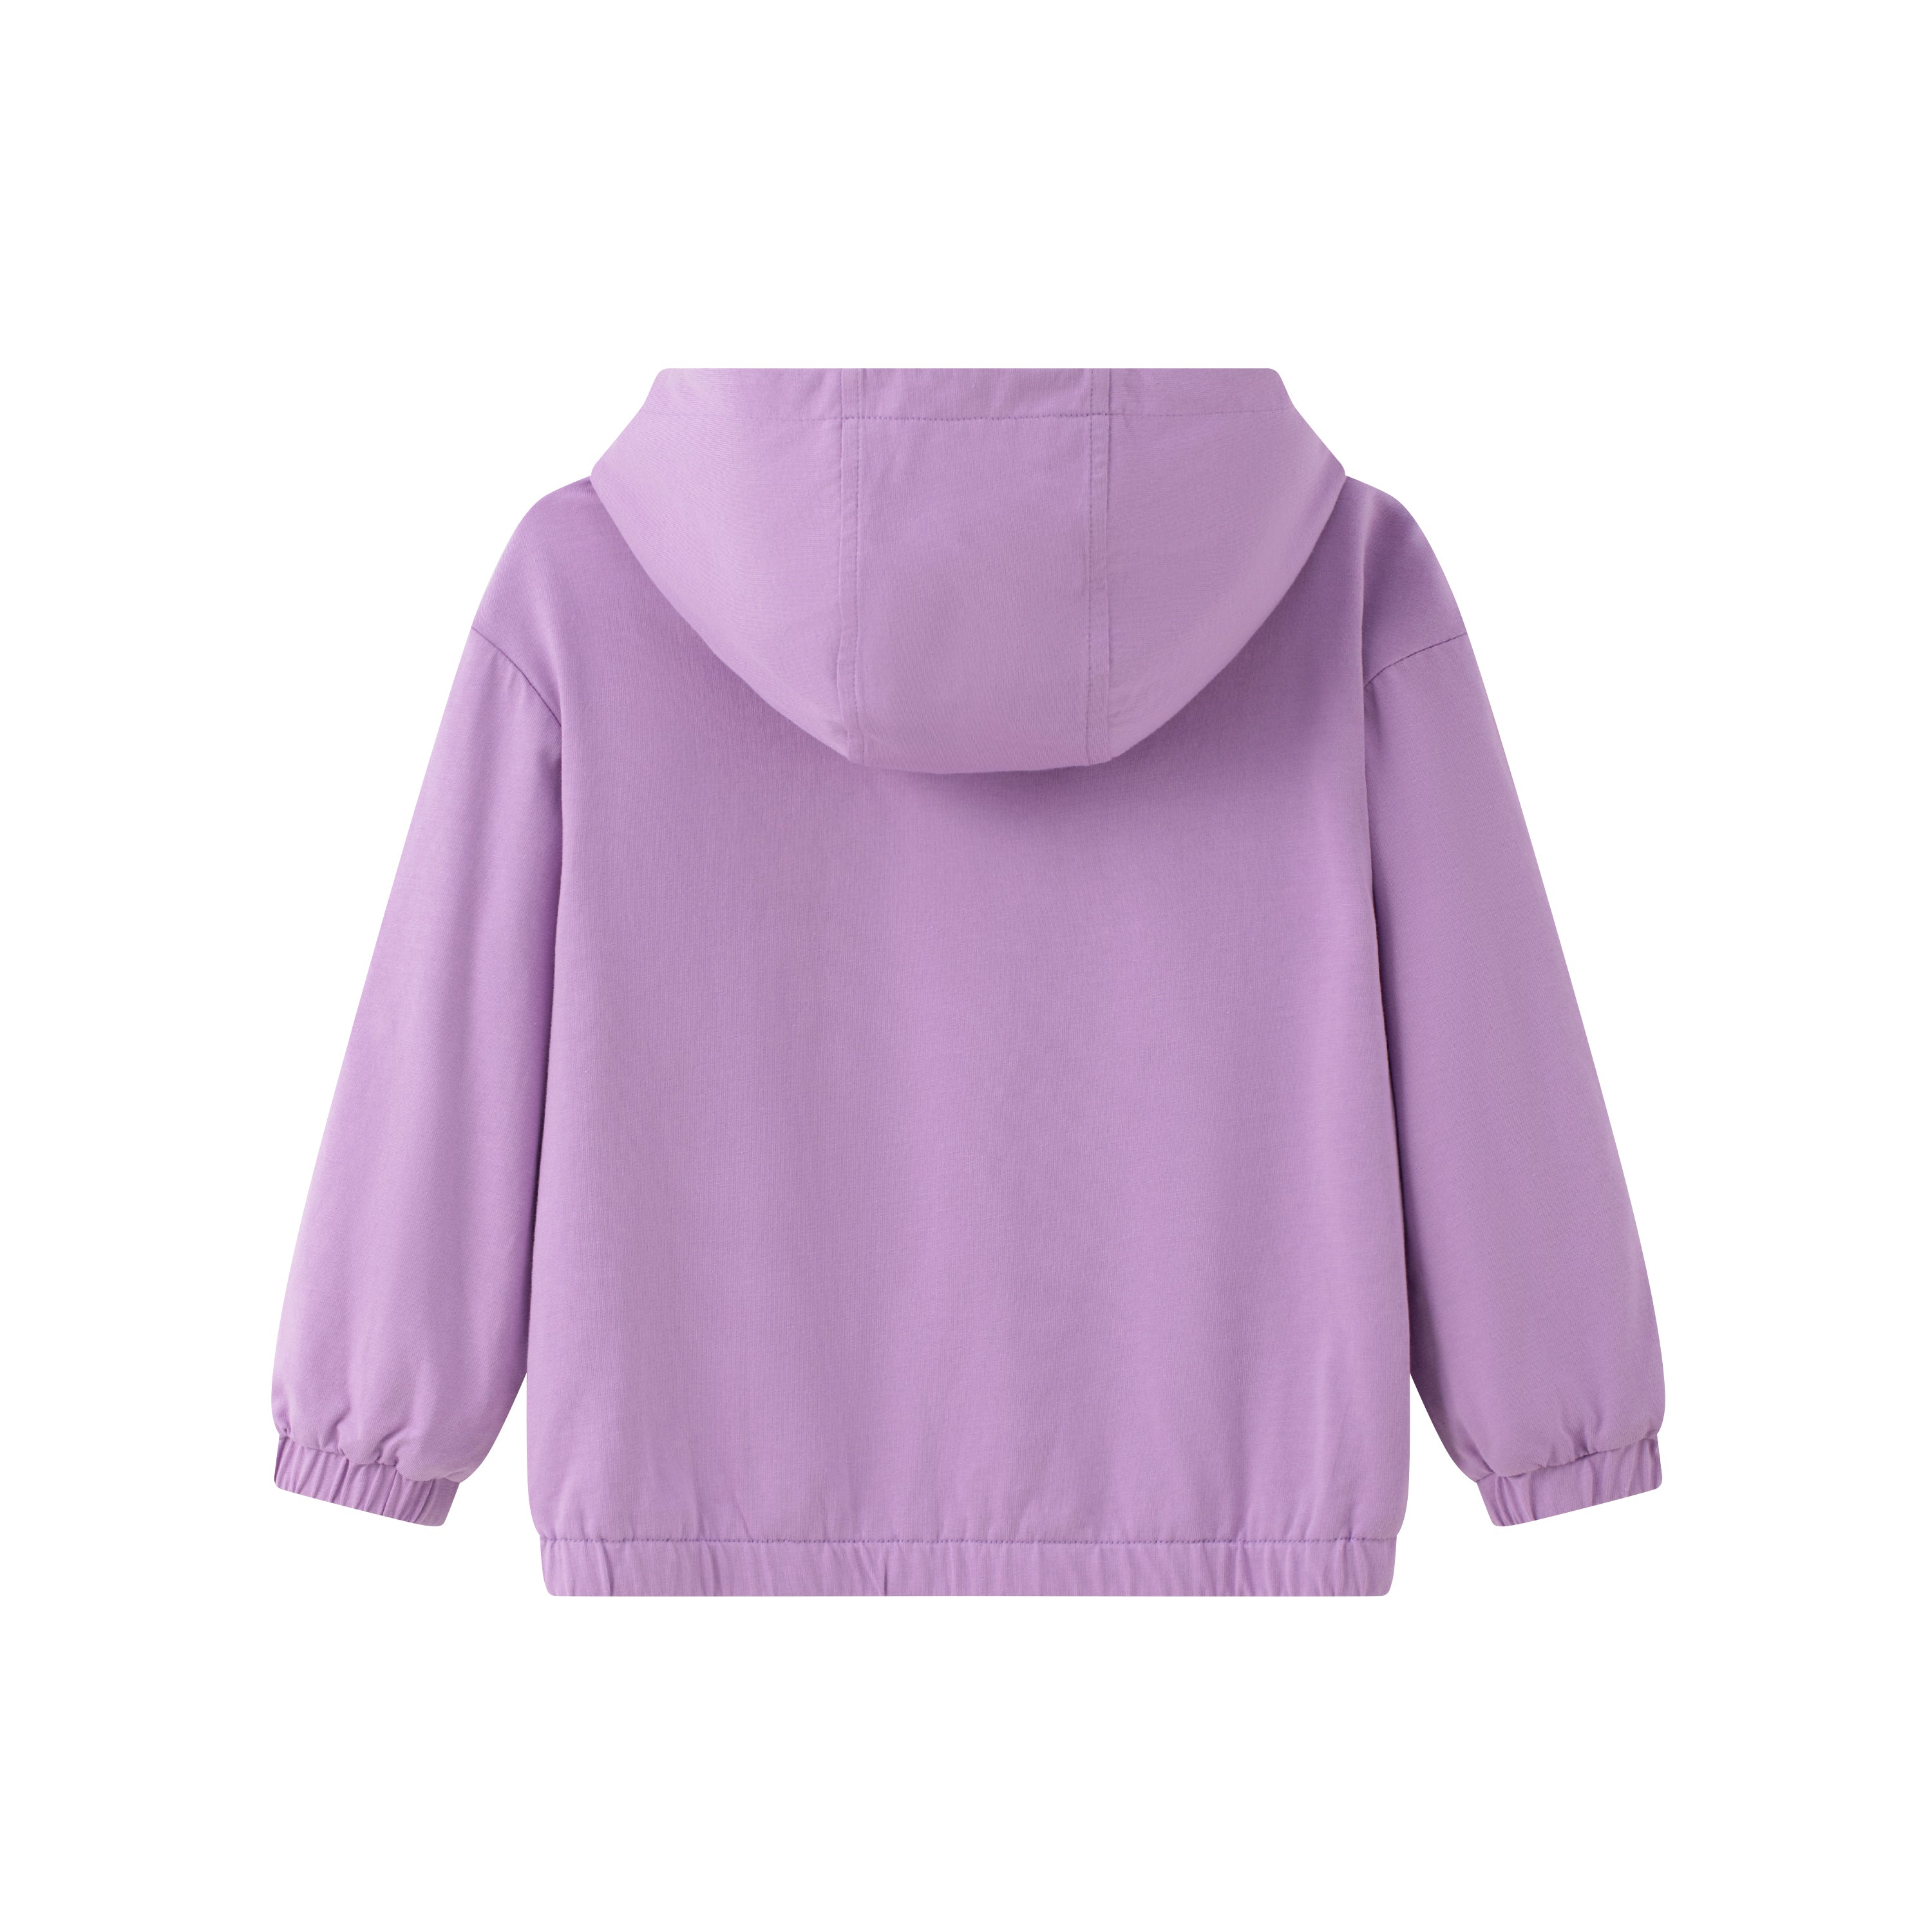 Vauva SS24 - Girls Long Sleeves Windbreaker (Purple) - Product 9